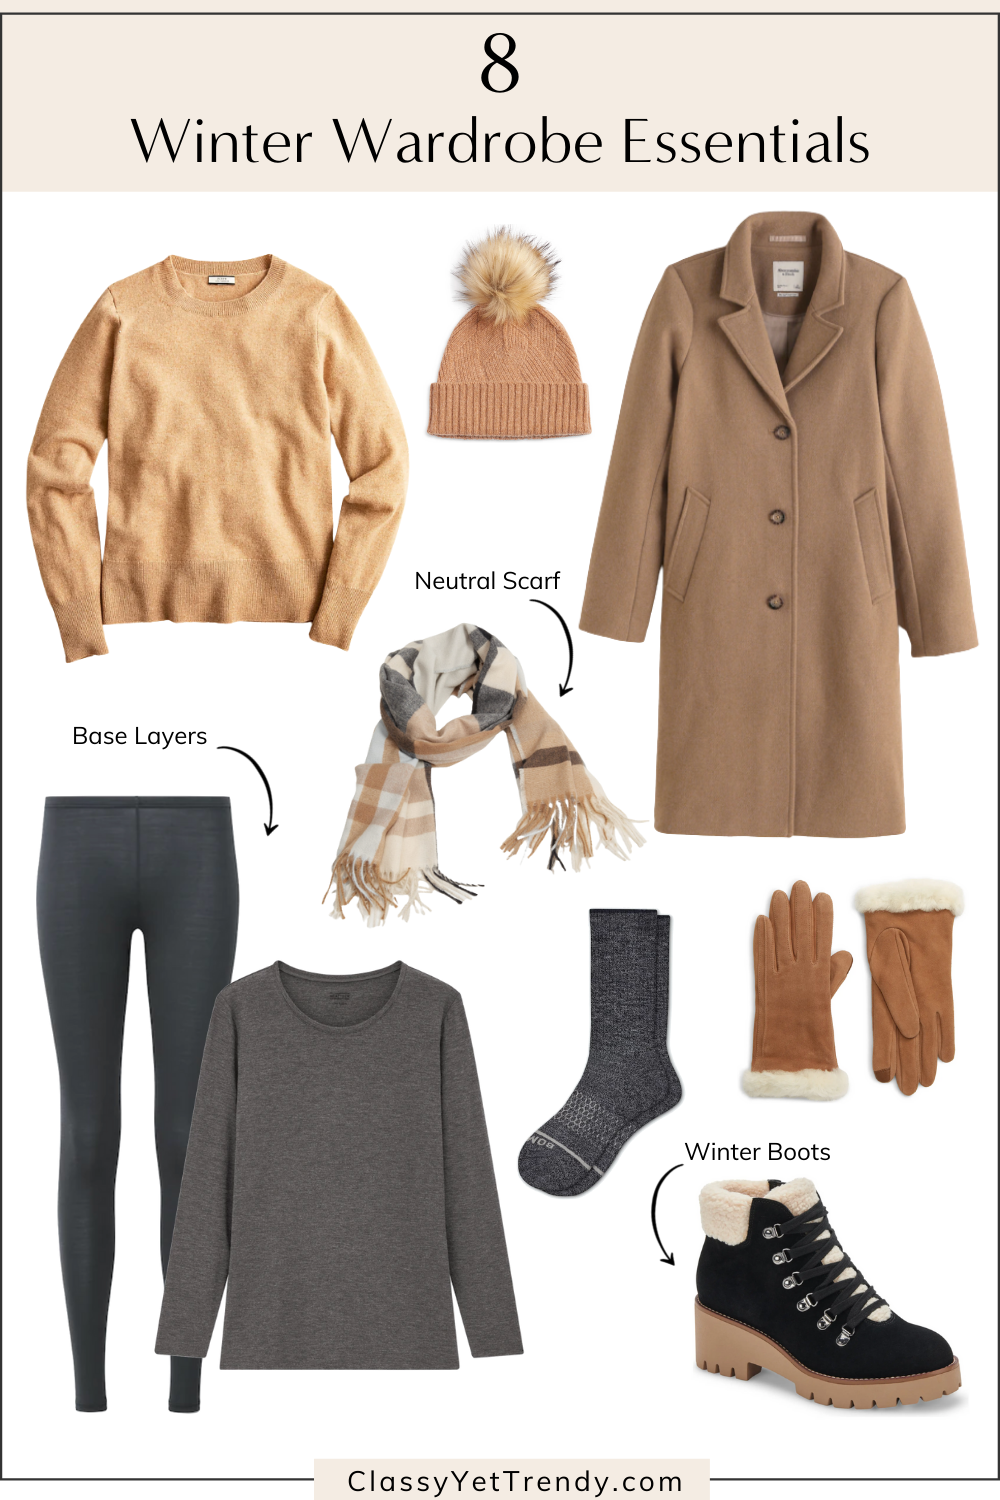 Blog - Florida's Winter Wardrobe Essentials: Fashion Tips for a